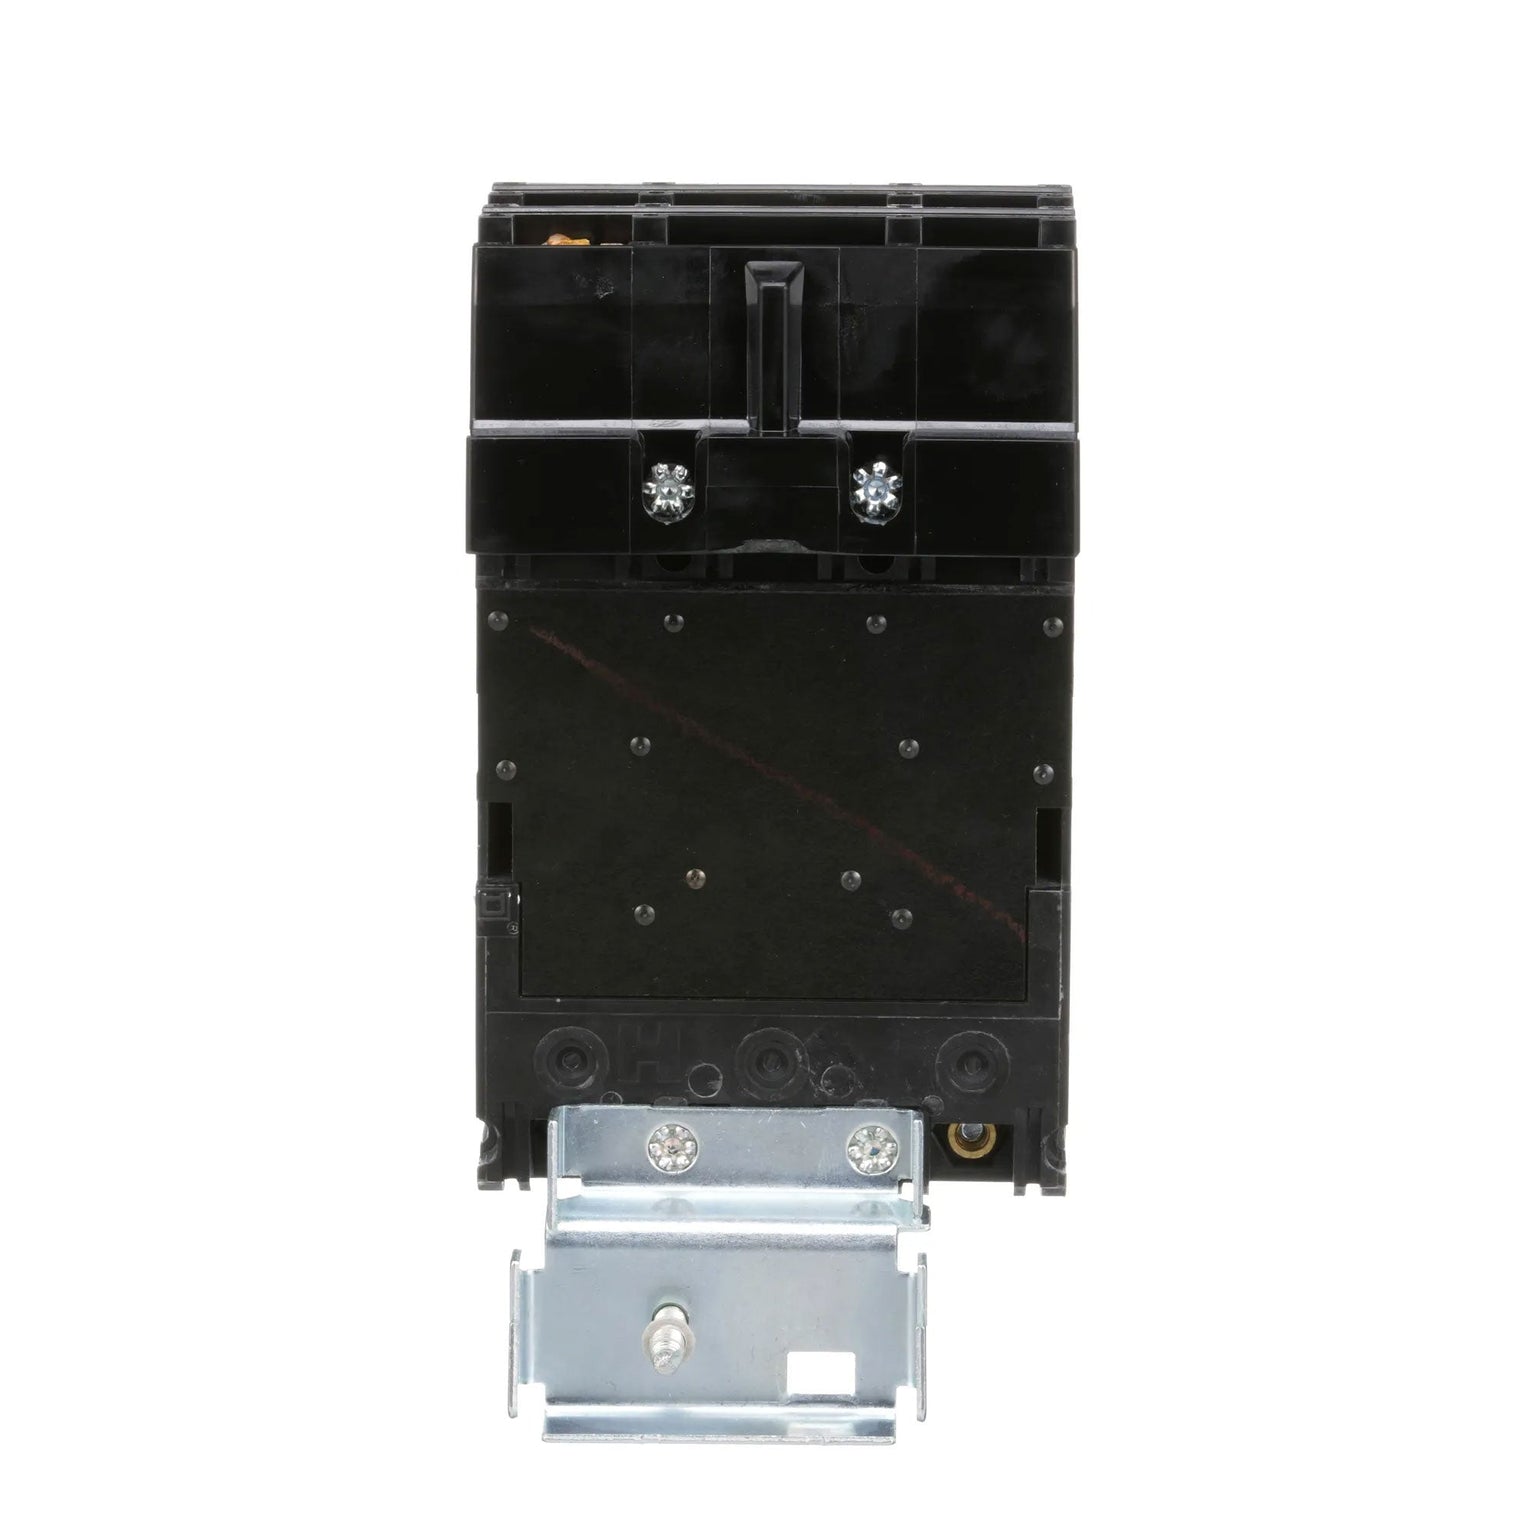 FH36100 - Square D - Molded Case Circuit Breaker